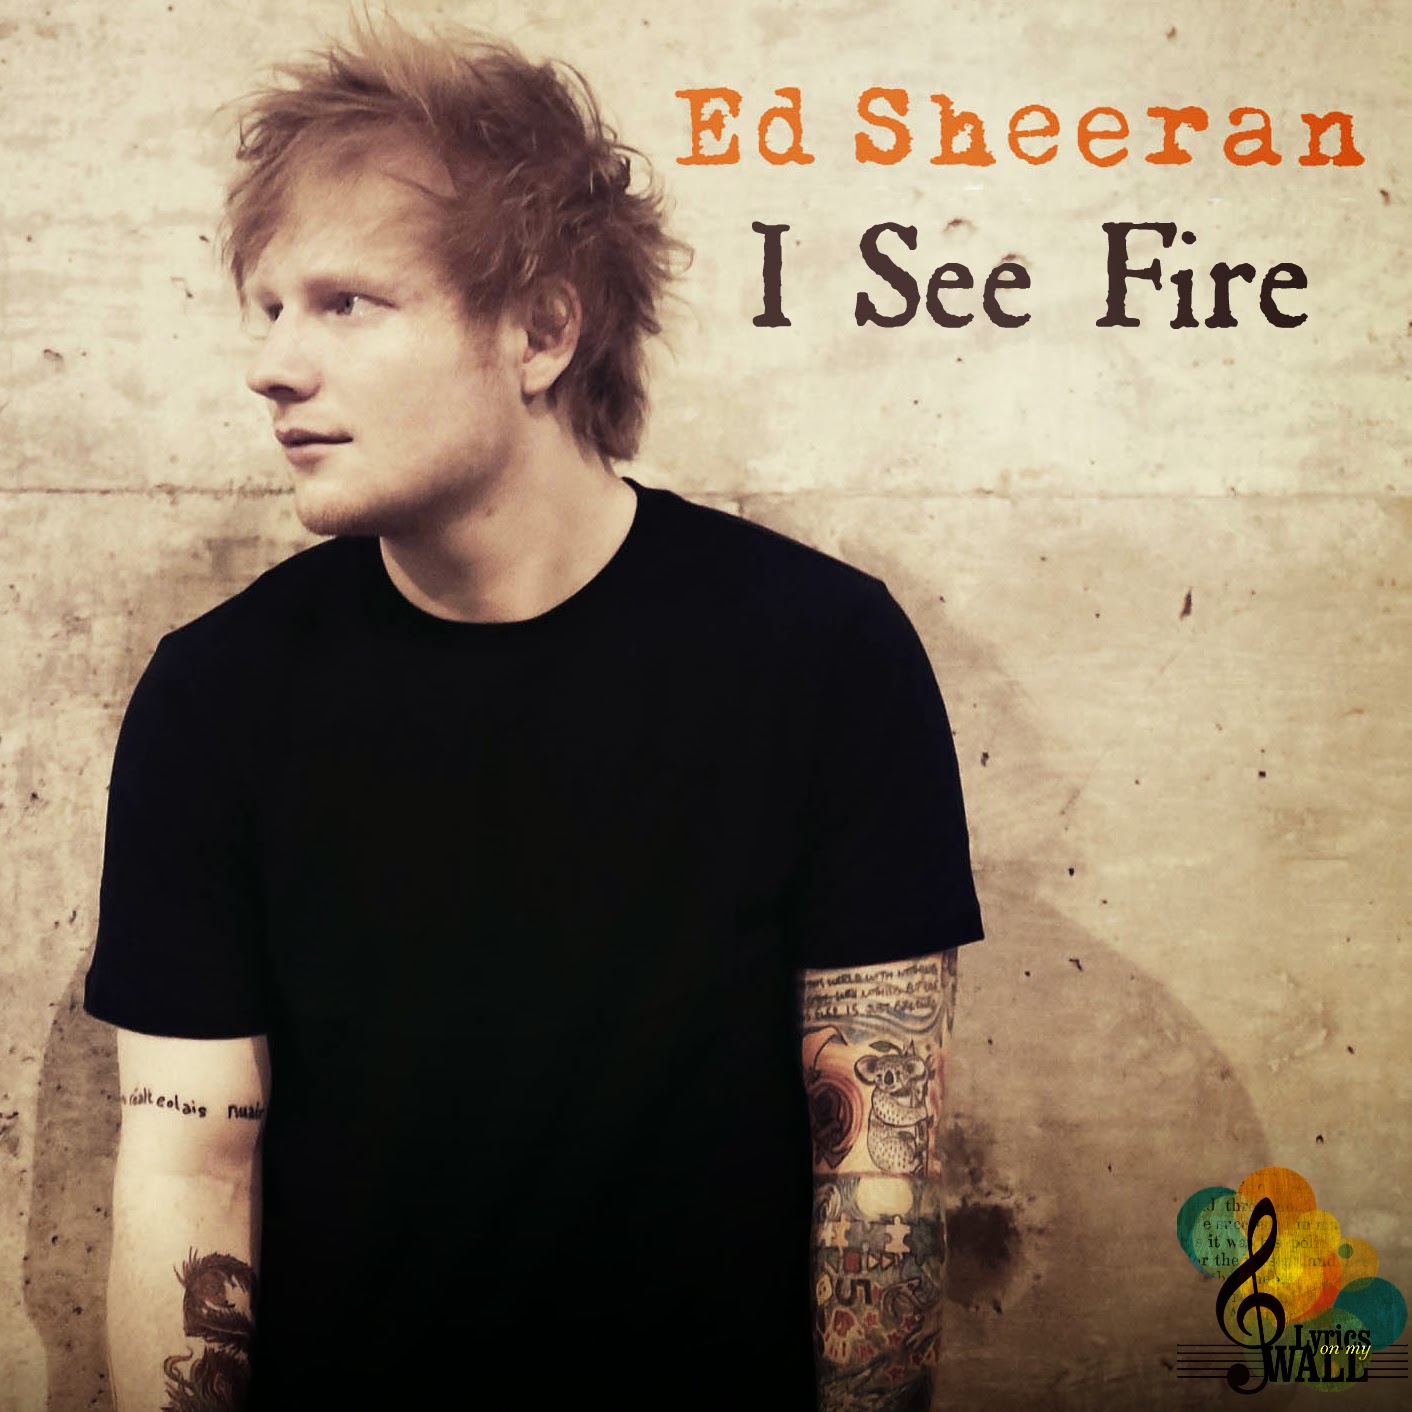 Ed Sheeran - I See Fire (Hugh Graham x Nath Jennings)